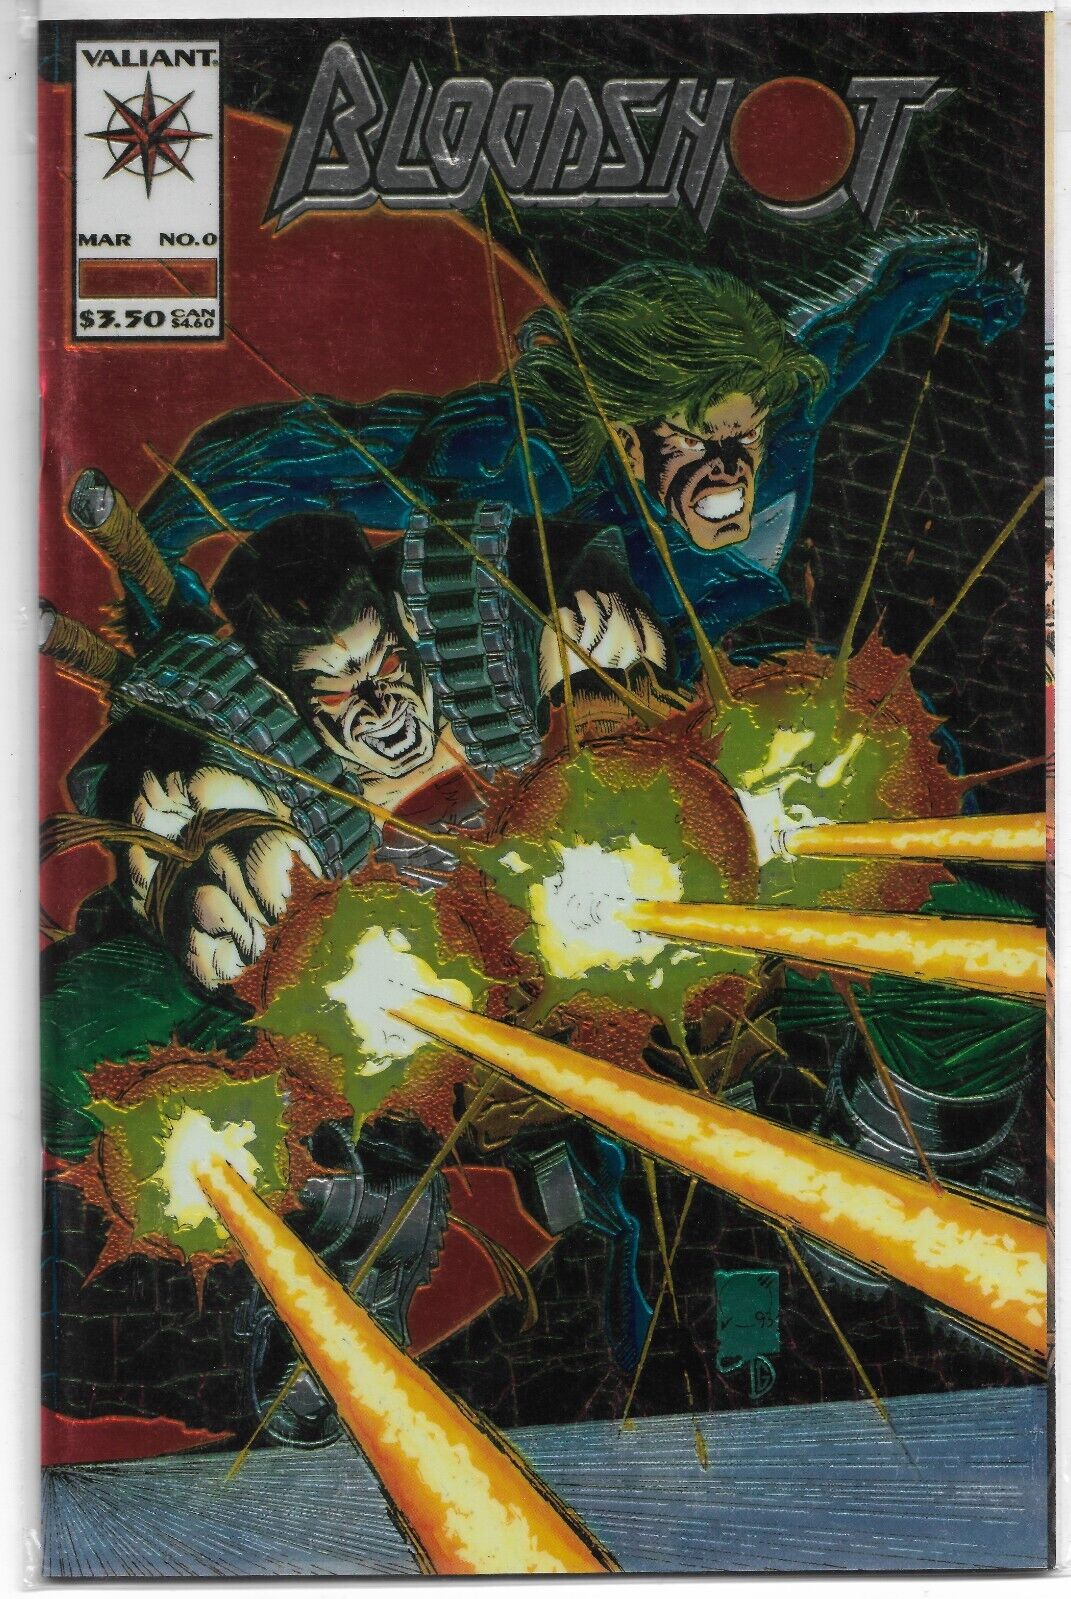 BLOODSHOT #0  - 1994 Valiant Comics Foil Cover